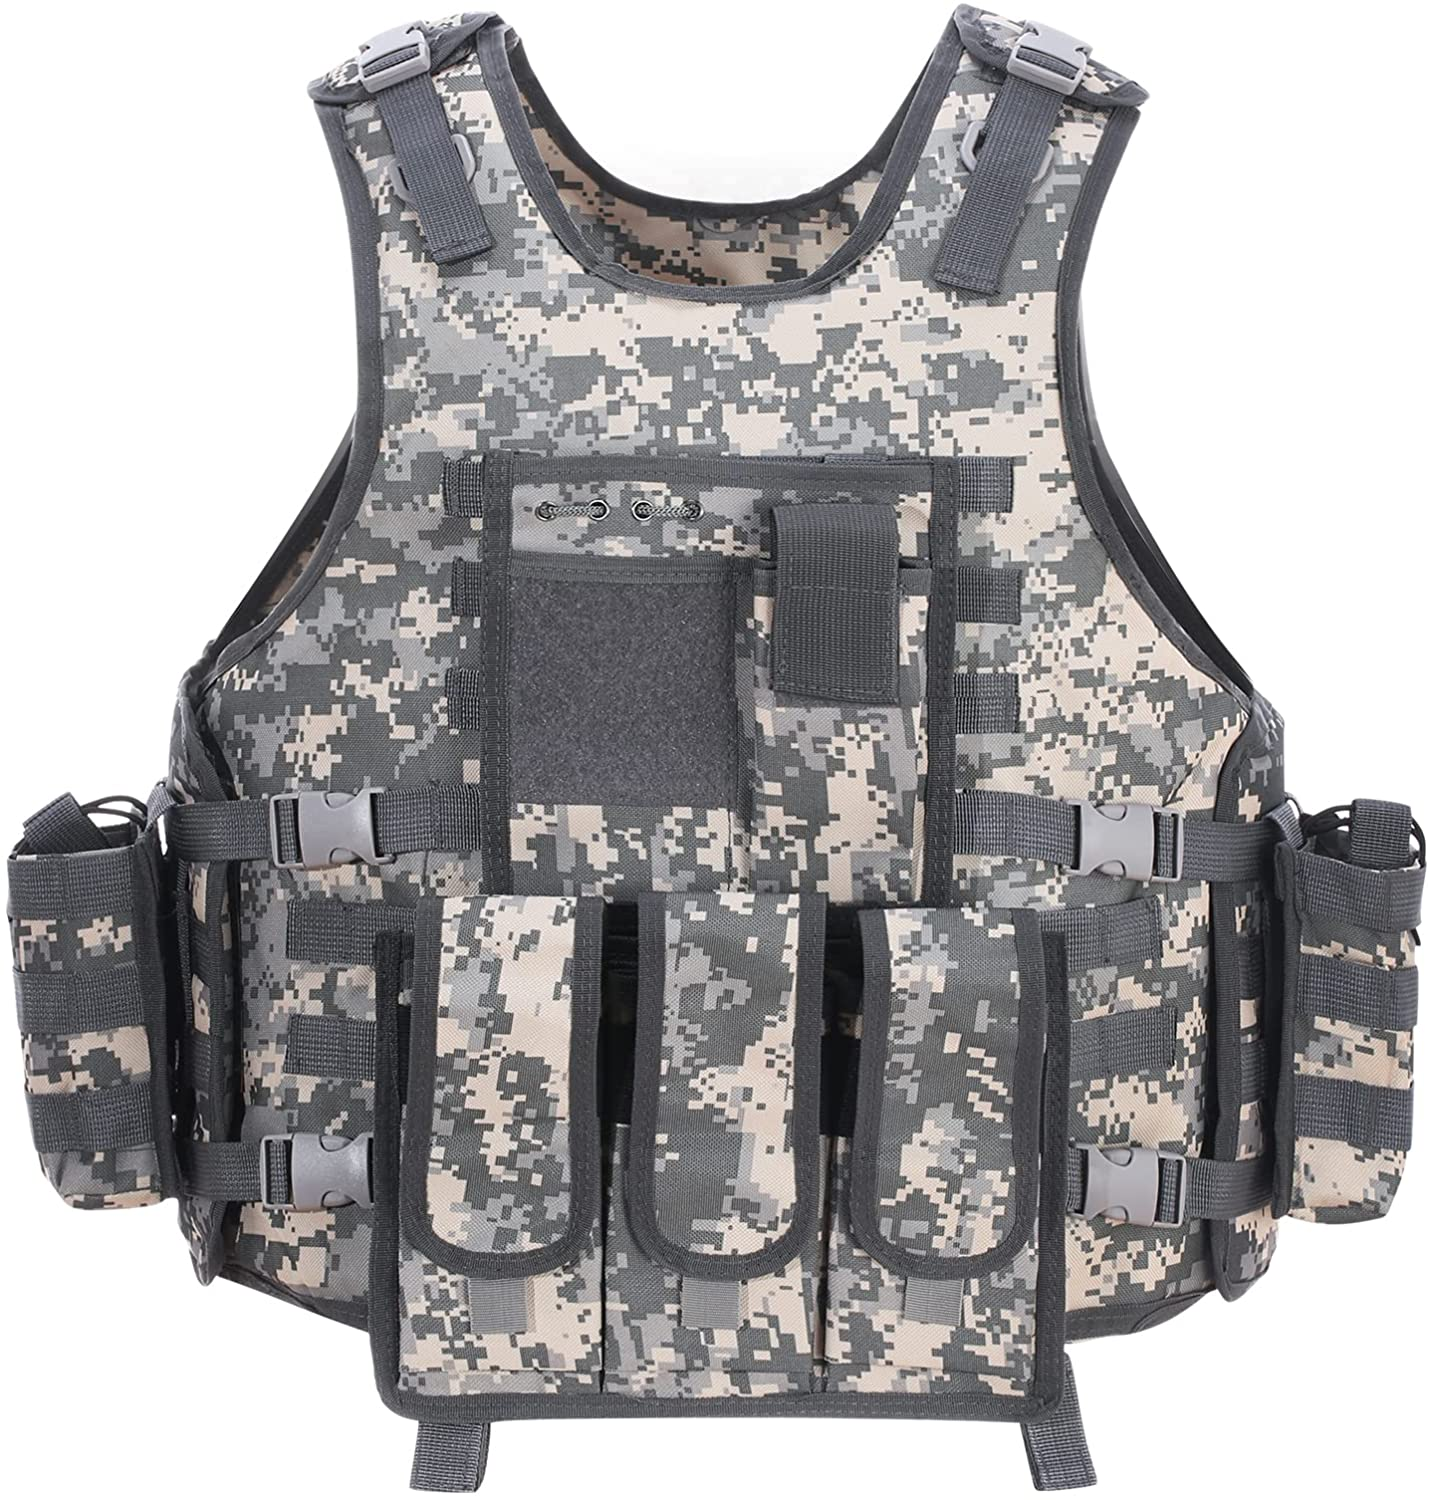 Tactical Vest Adjustable Outdoor Gear Load Carrier Vest for Hunting Hiking Camping CS Game